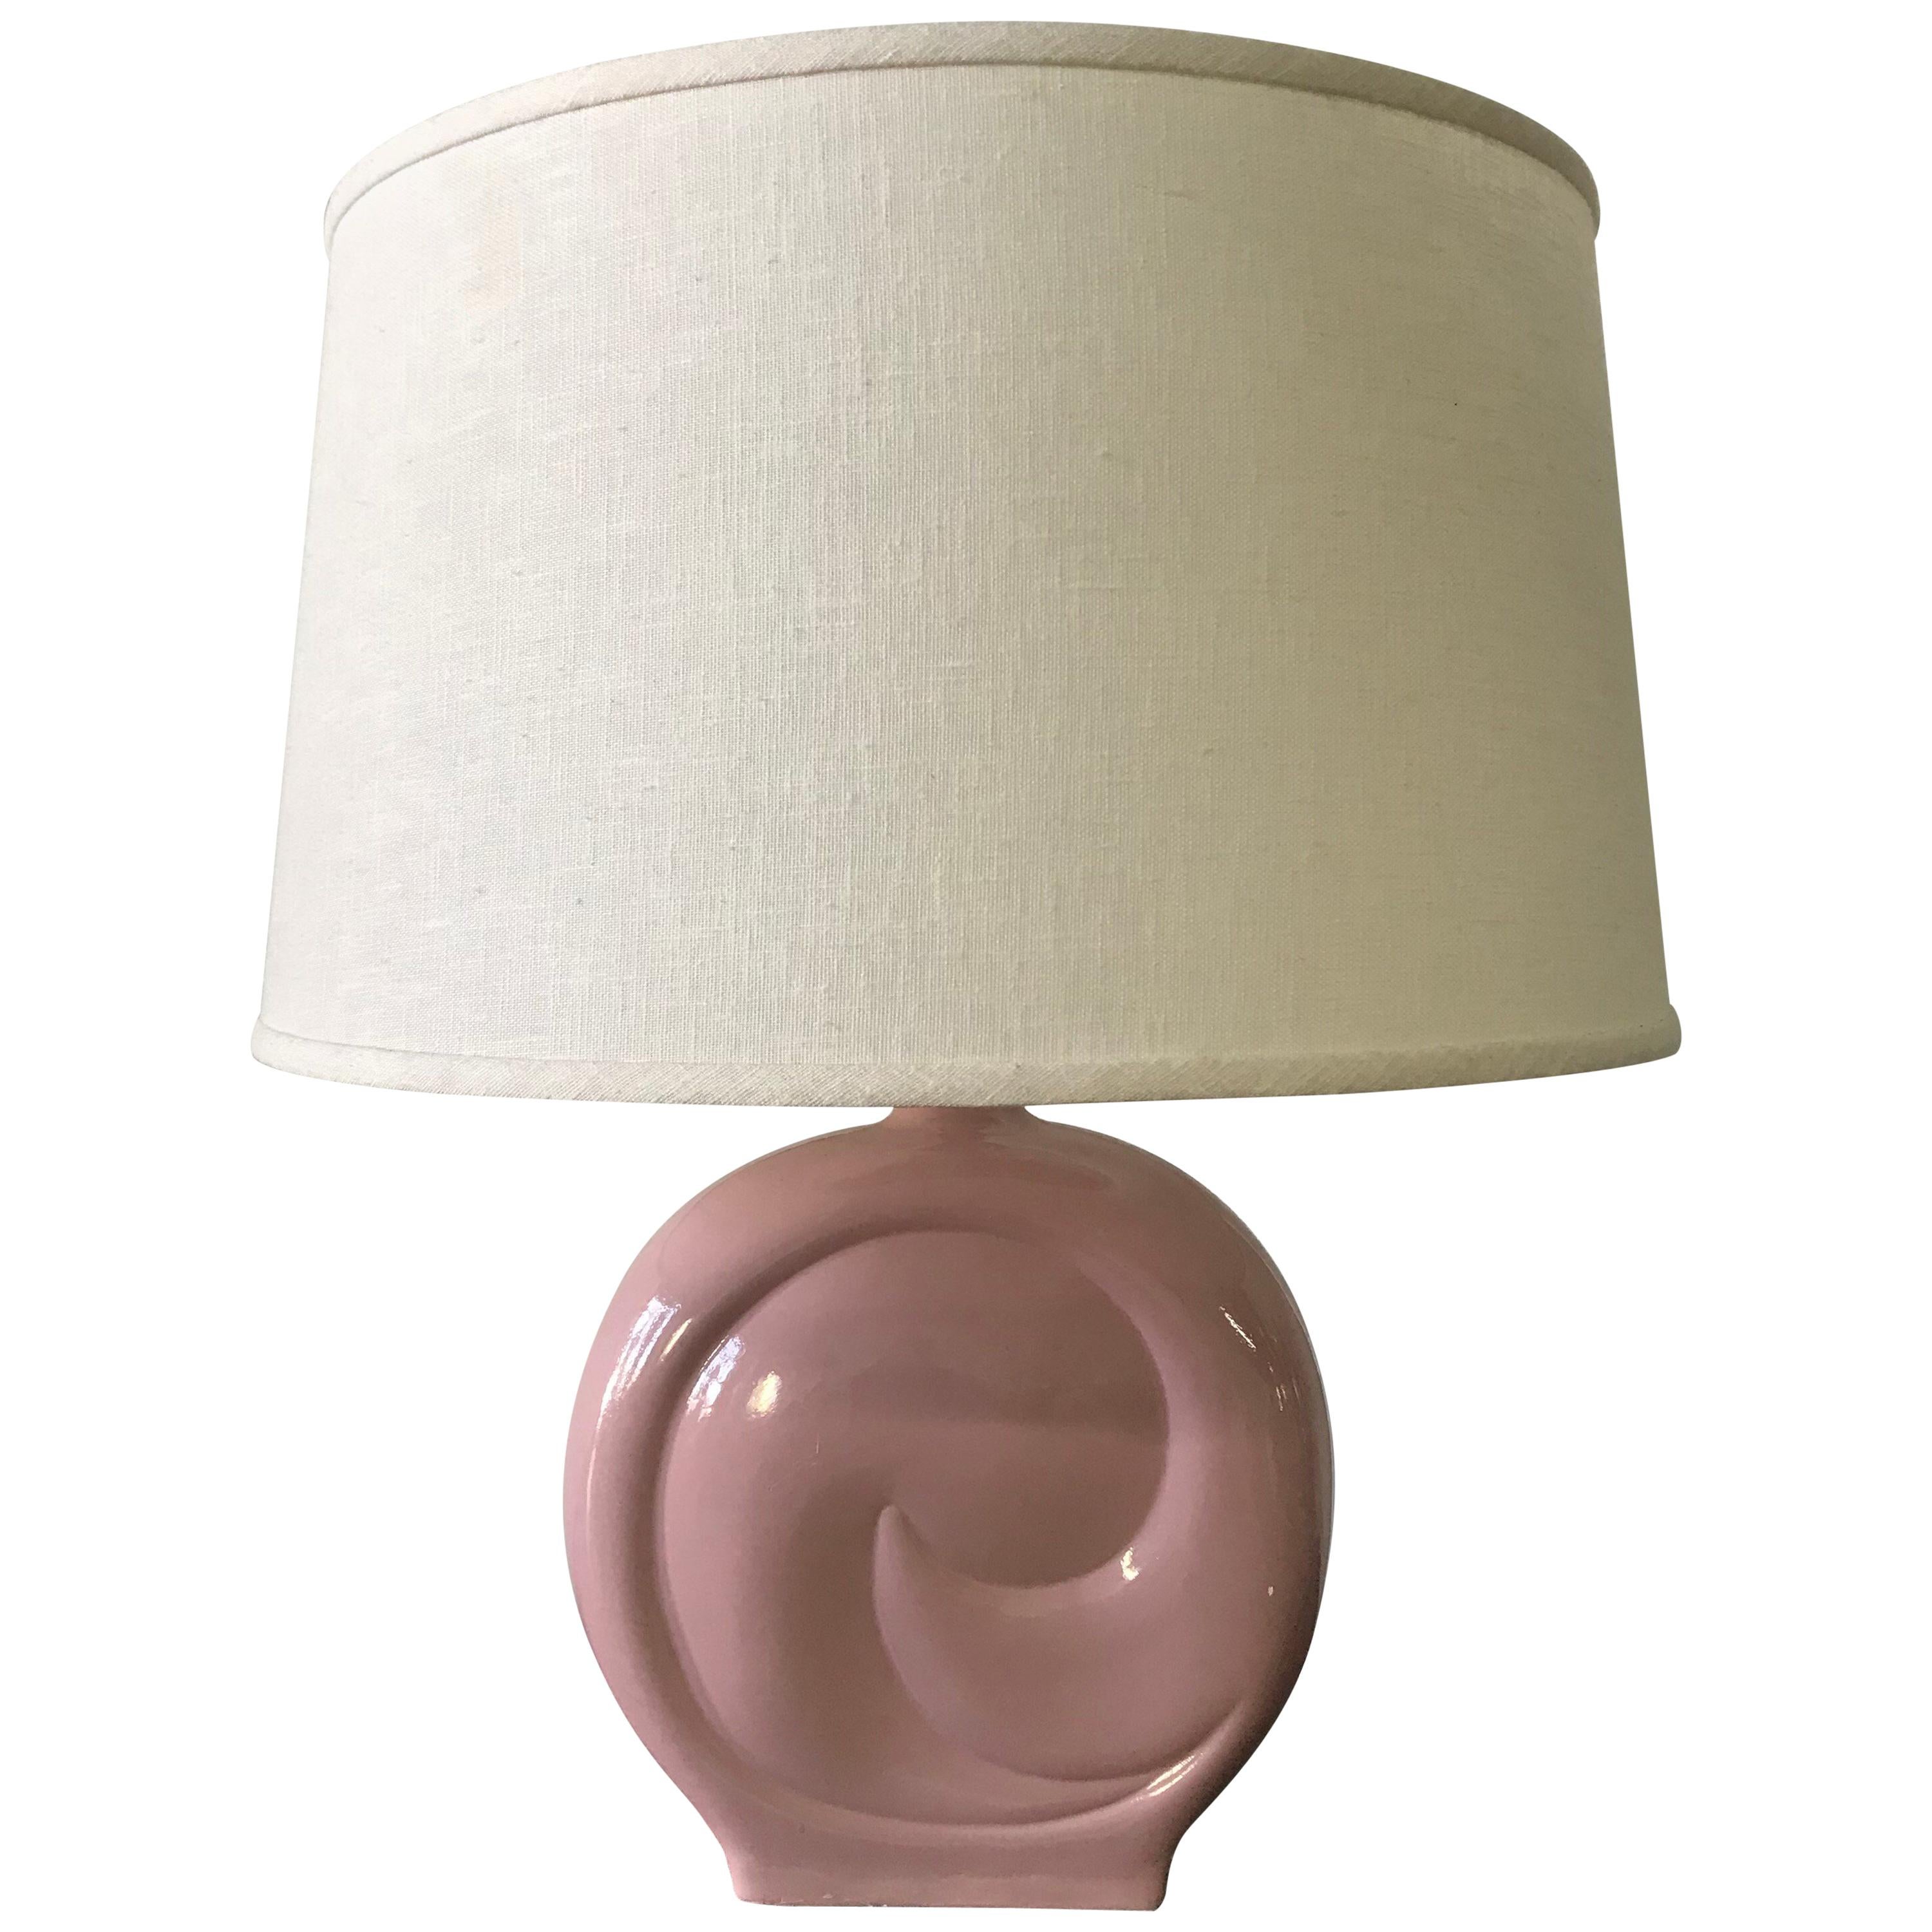 Pierre Cardin Pink Porcelain Ceramic Table Lamp For Sale